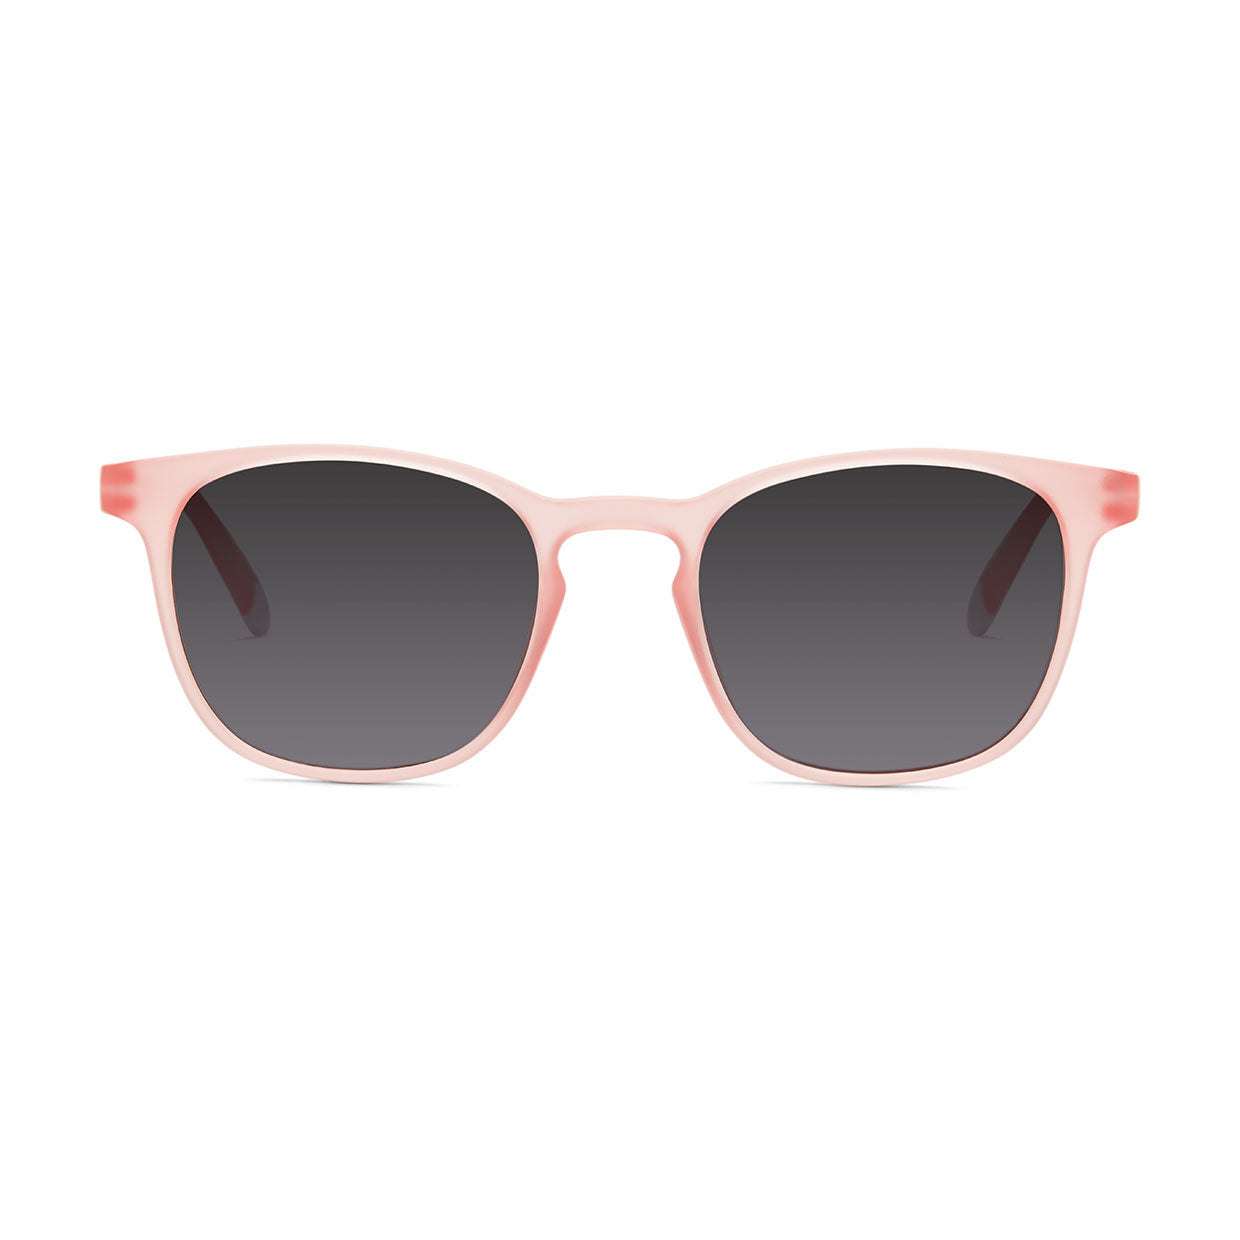 Dalston Sun – Dusty Pink | Screen Glasses